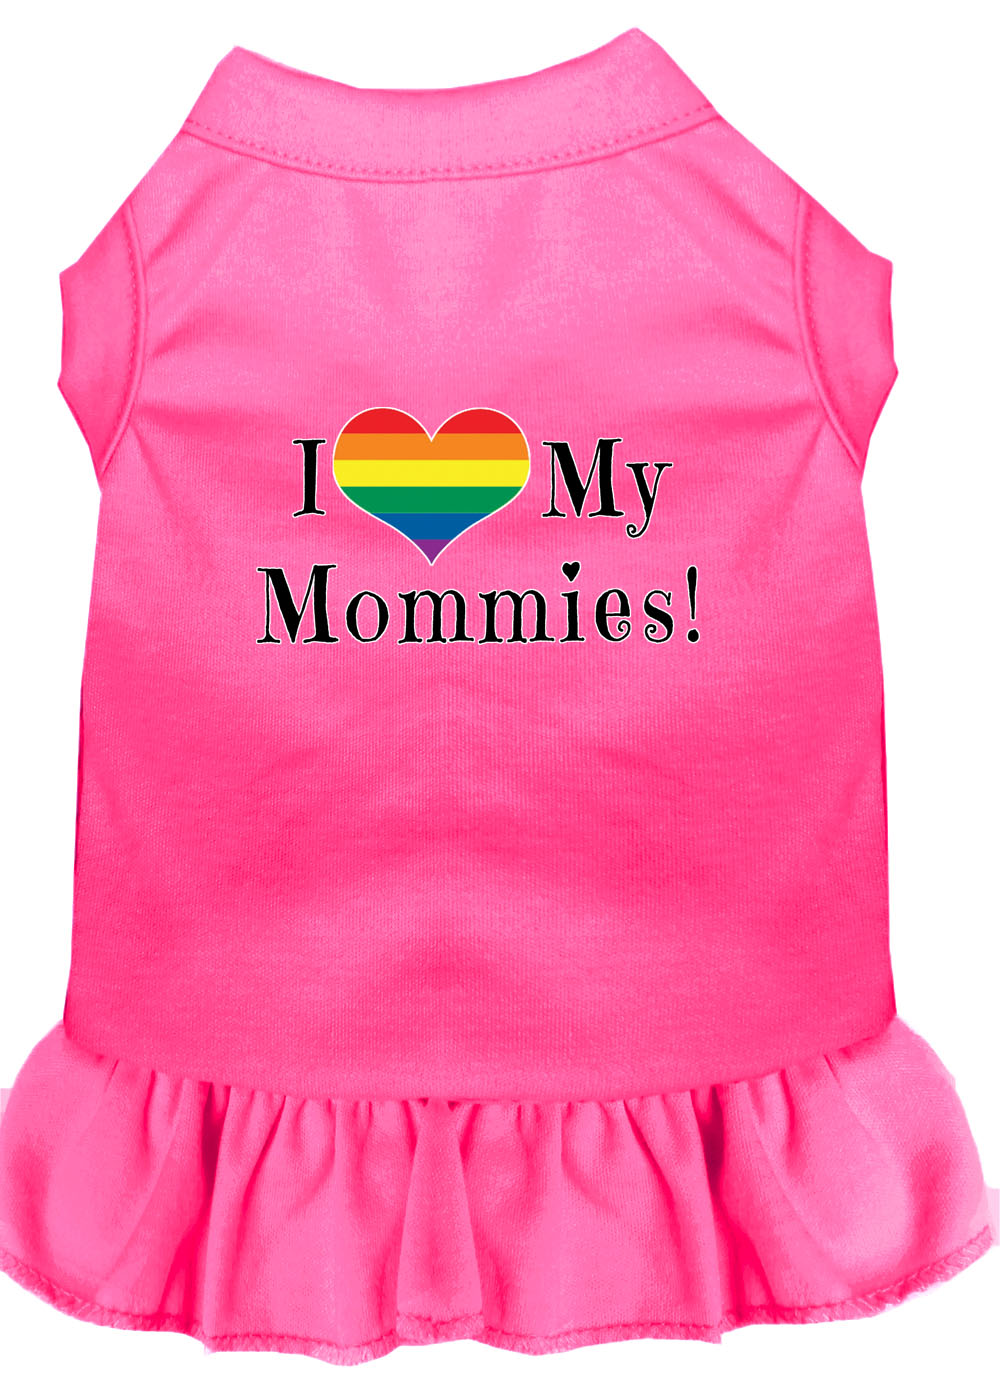 I Heart my Mommies Screen Print Dog Dress Bright Pink 4X